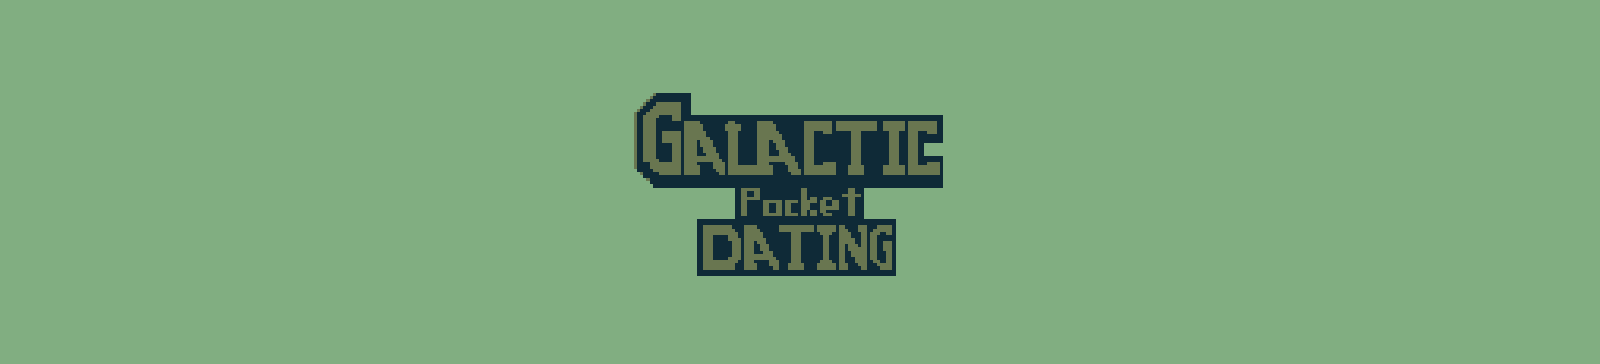 Galactic Pocket Dating - GSD GB